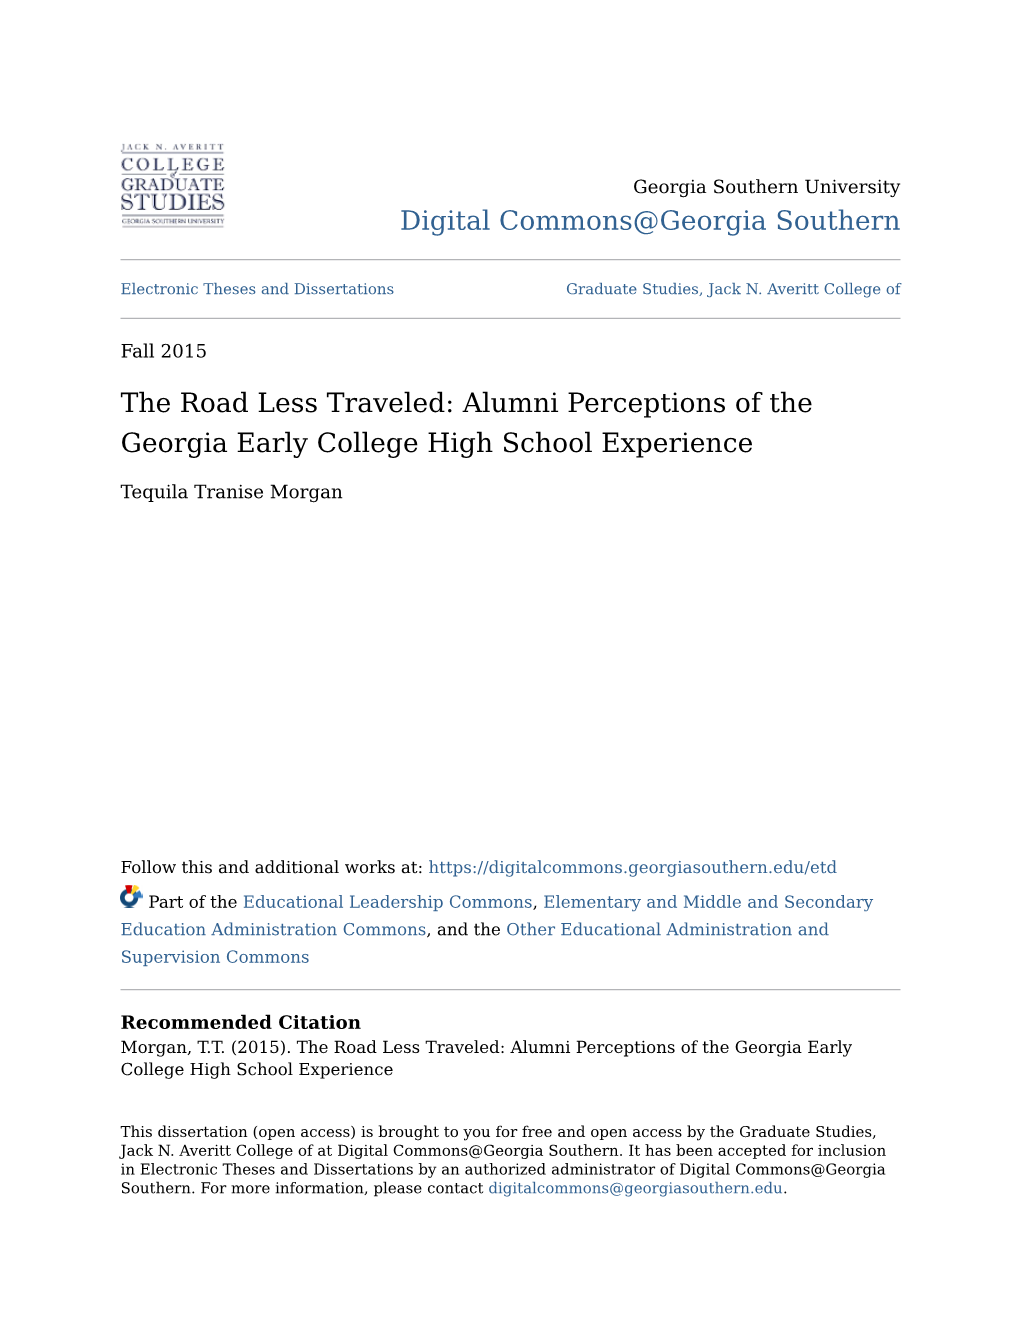 Alumni Perceptions of the Georgia Early College High School Experience